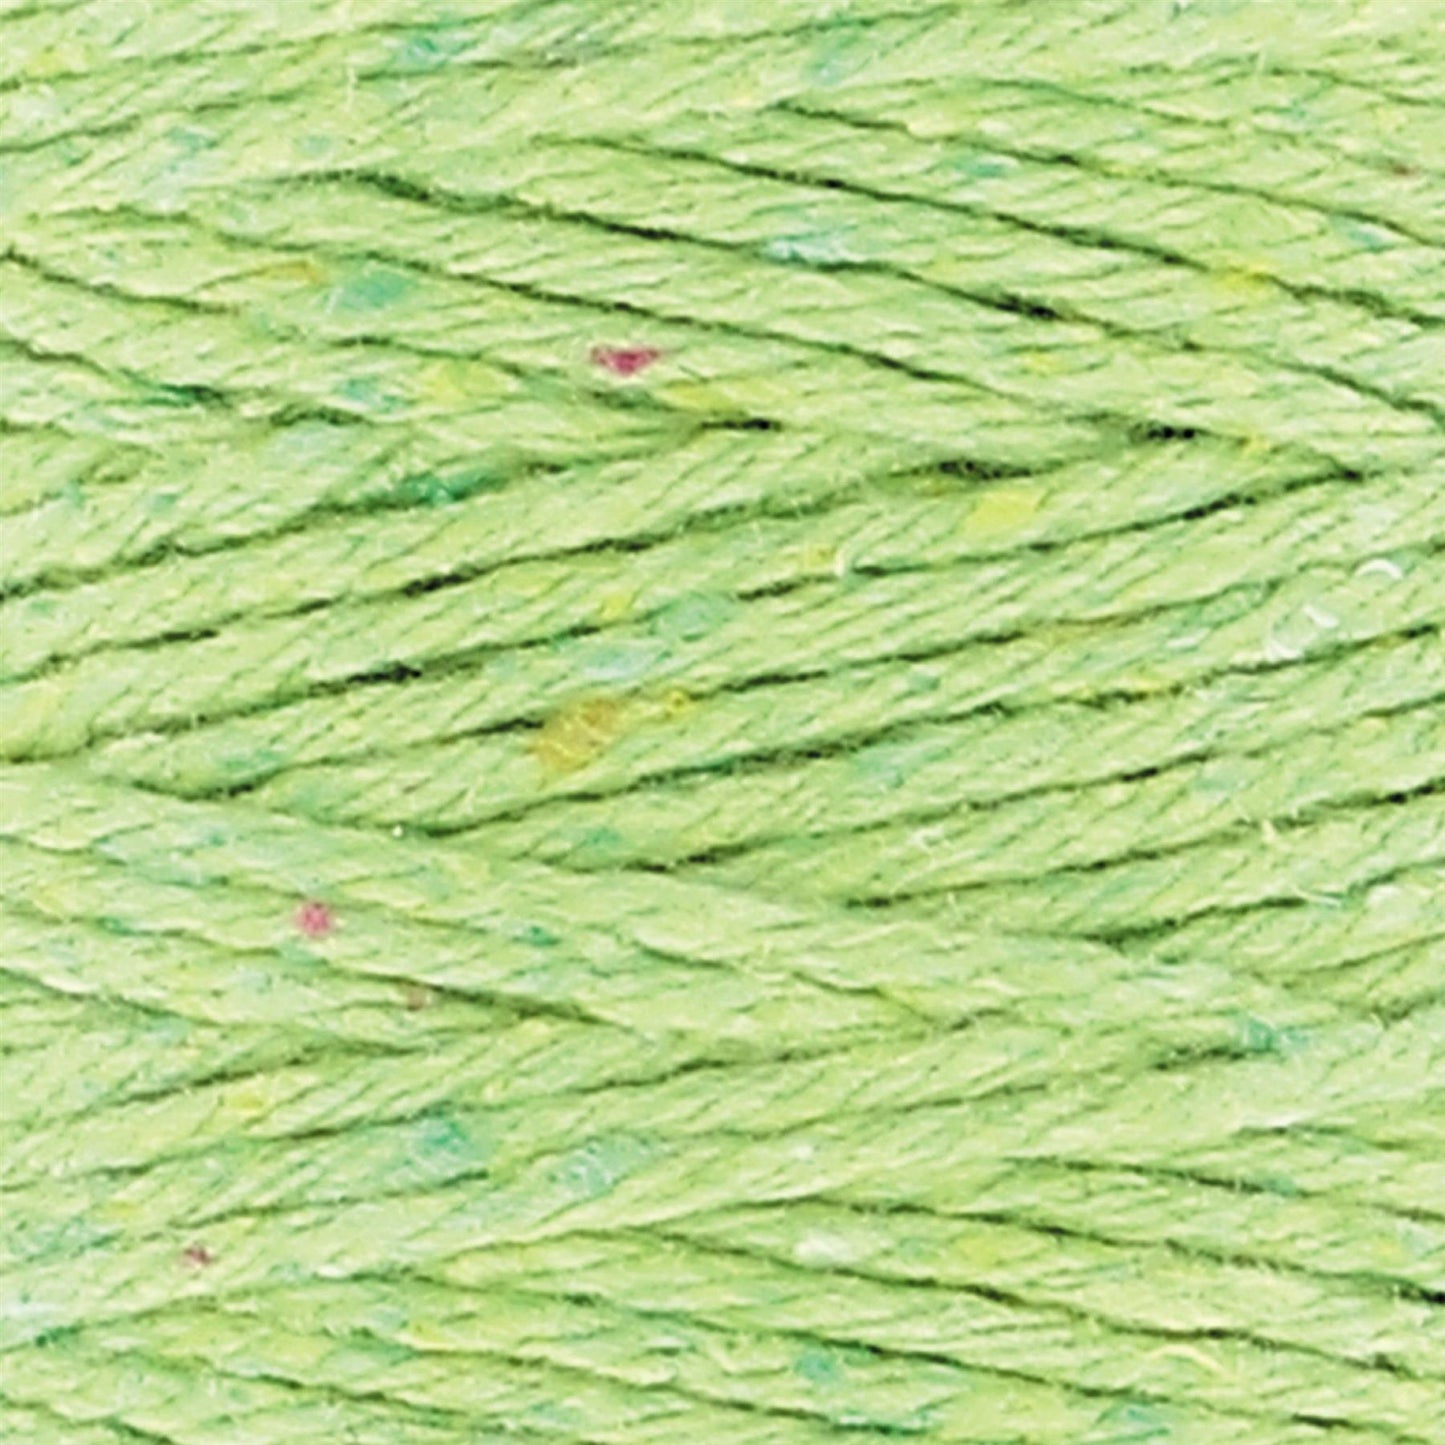 [Hoooked] R801 Eco Barbante Milano Lima Cotton Yarn - 204M, 200g